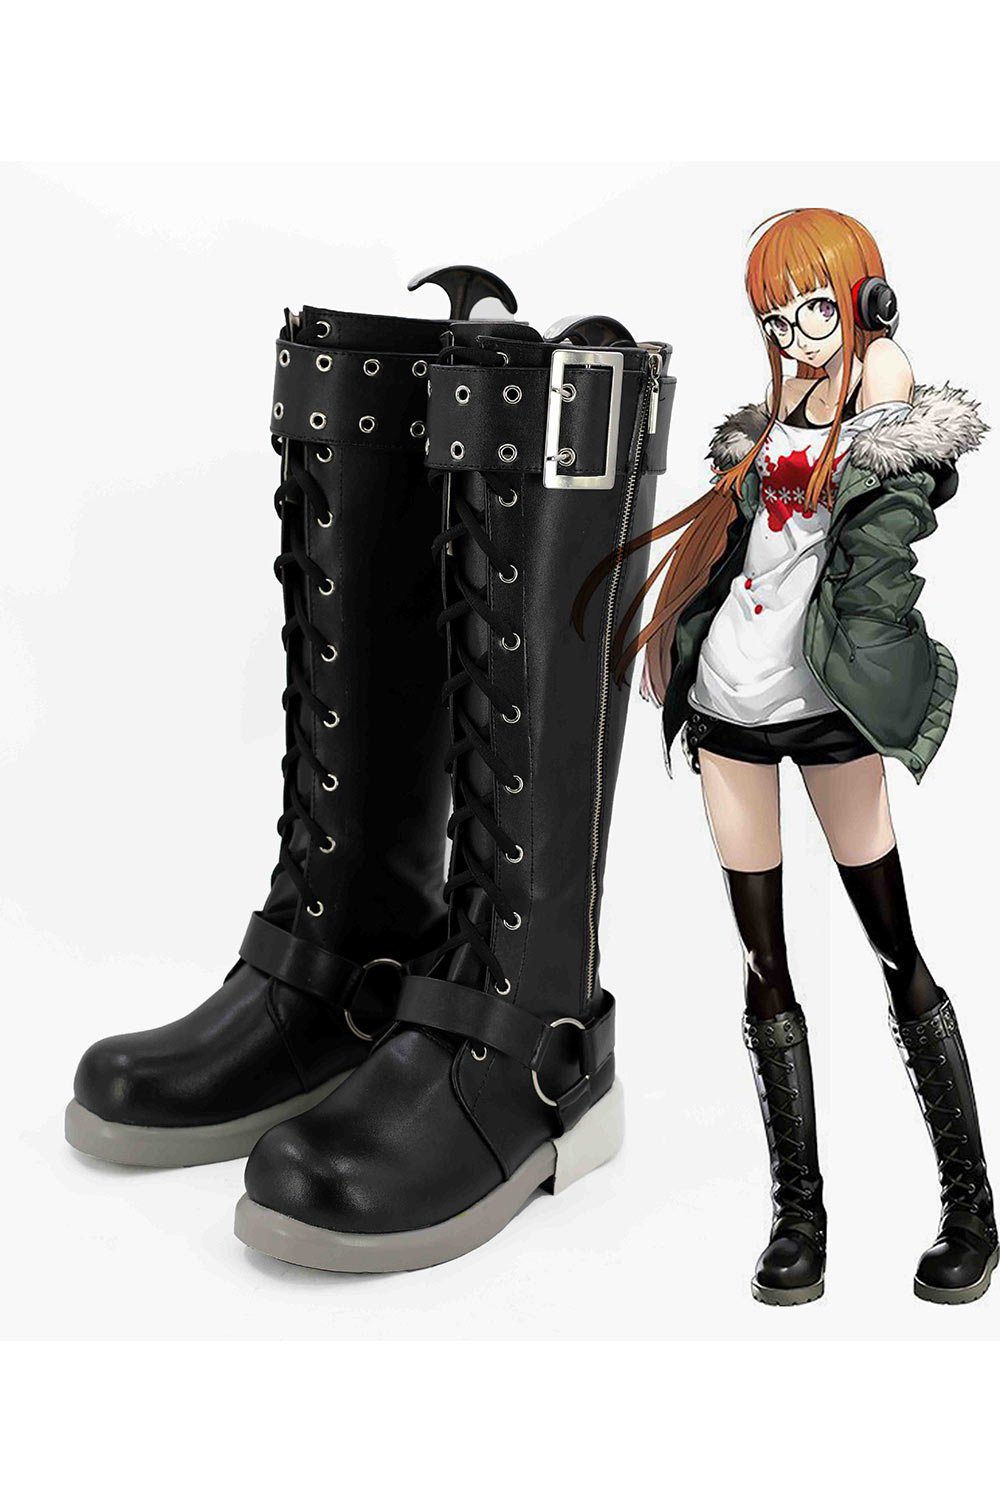 Persona 5 Futaba Sakura Bottes Cosplay Chaussures